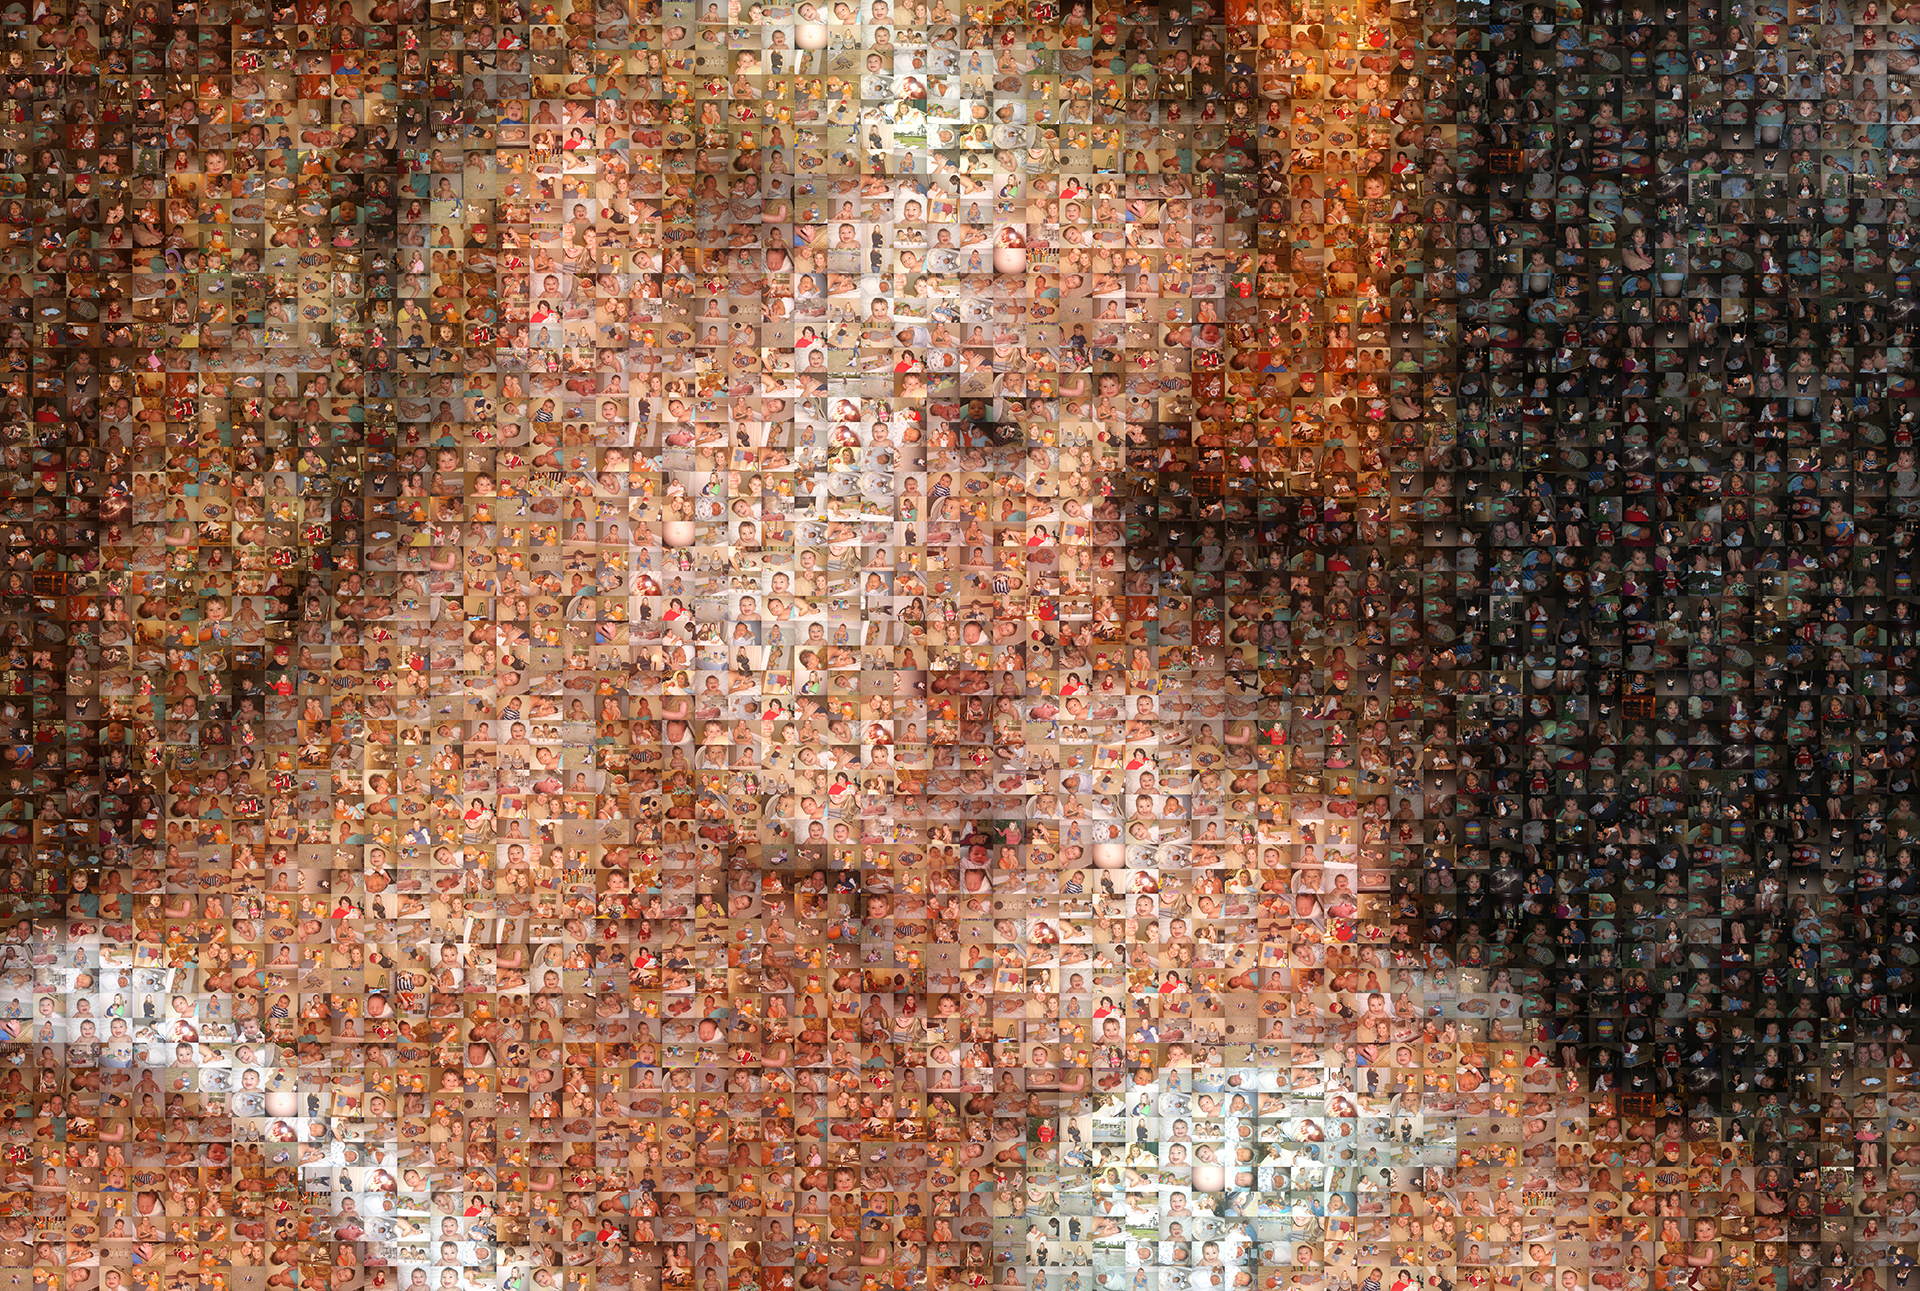 photo mosaic created using 1859 family and baby photos